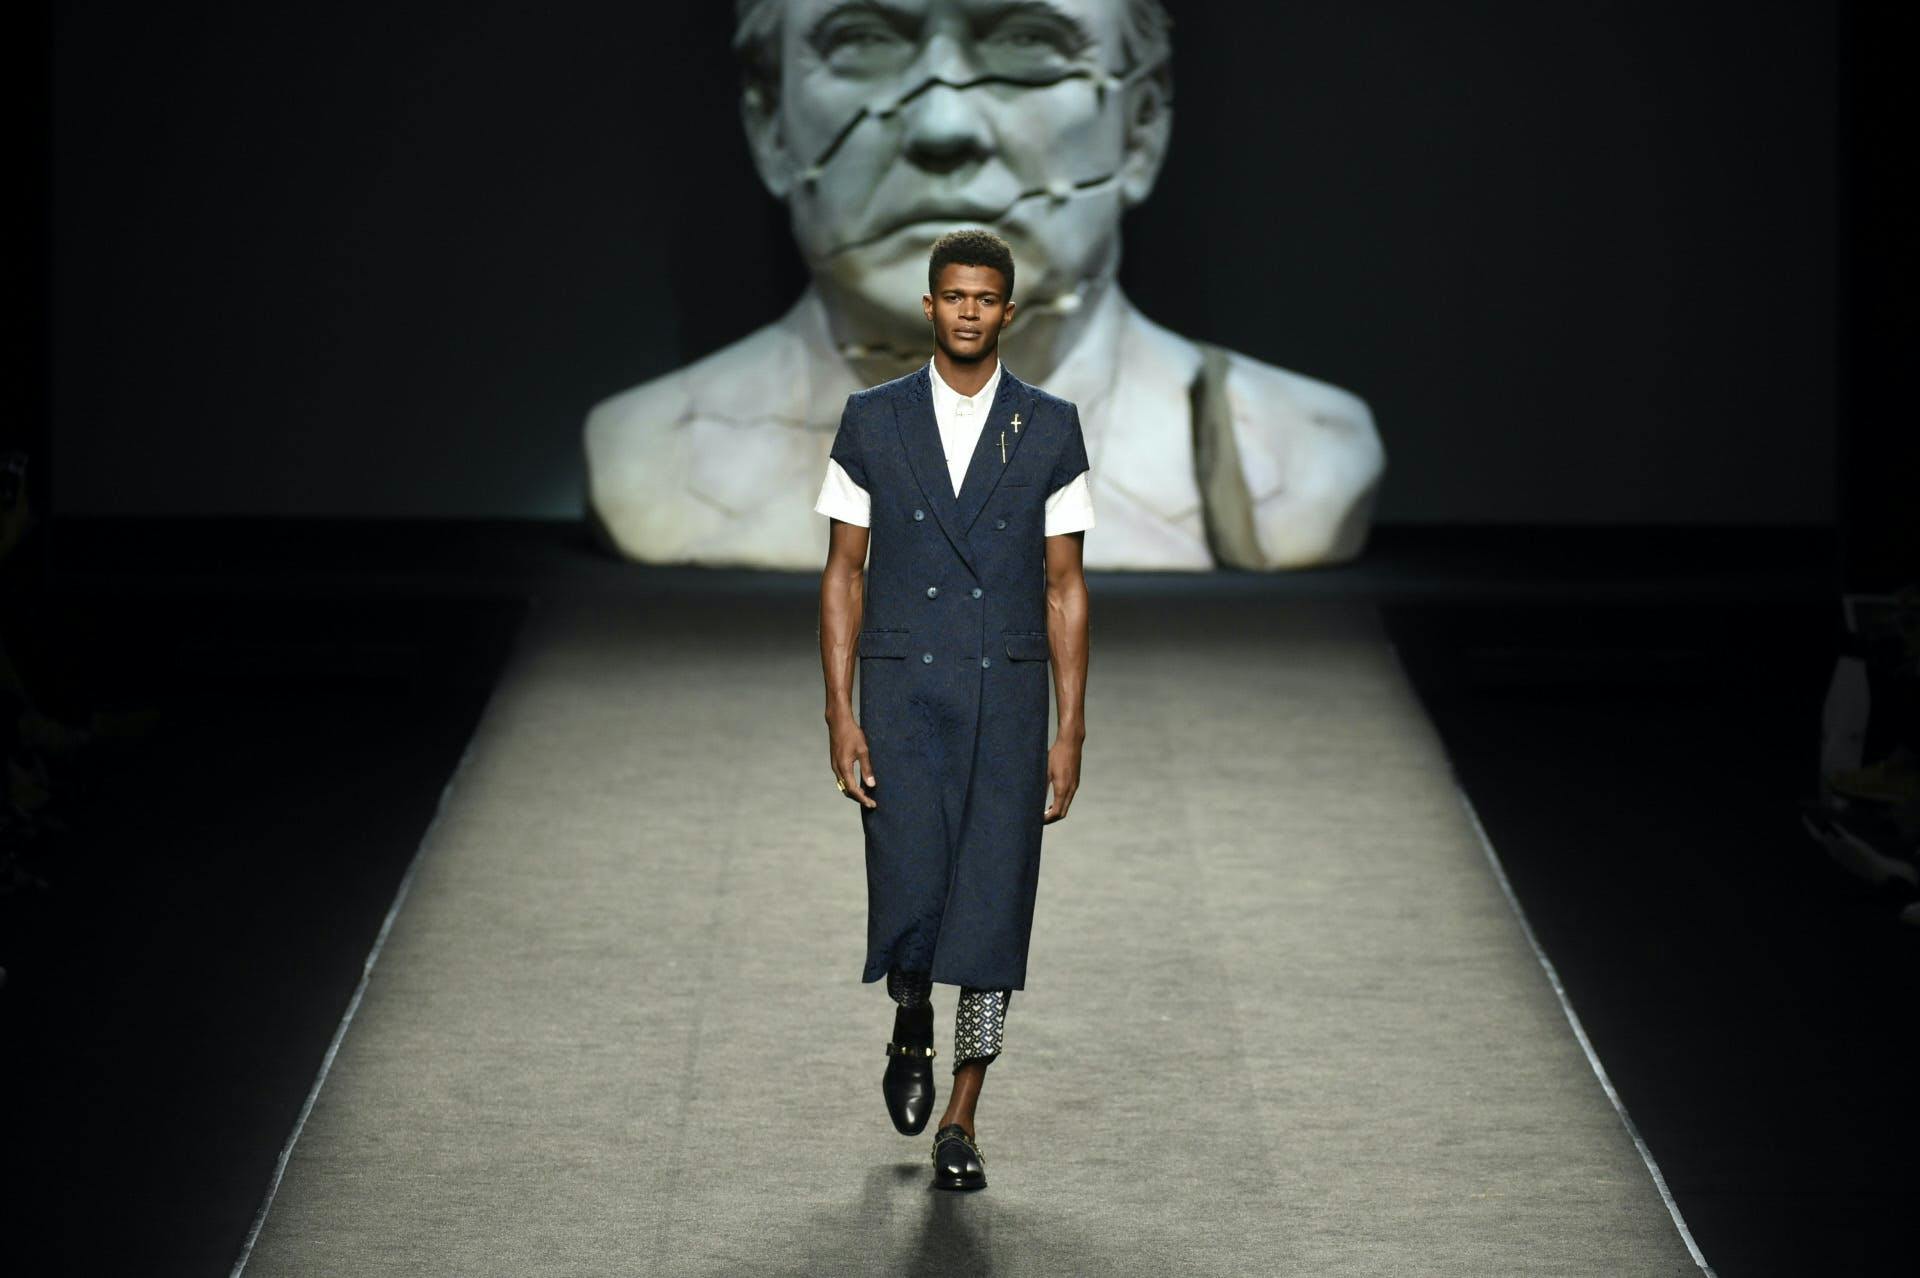 madrid clothing apparel fashion person human runway